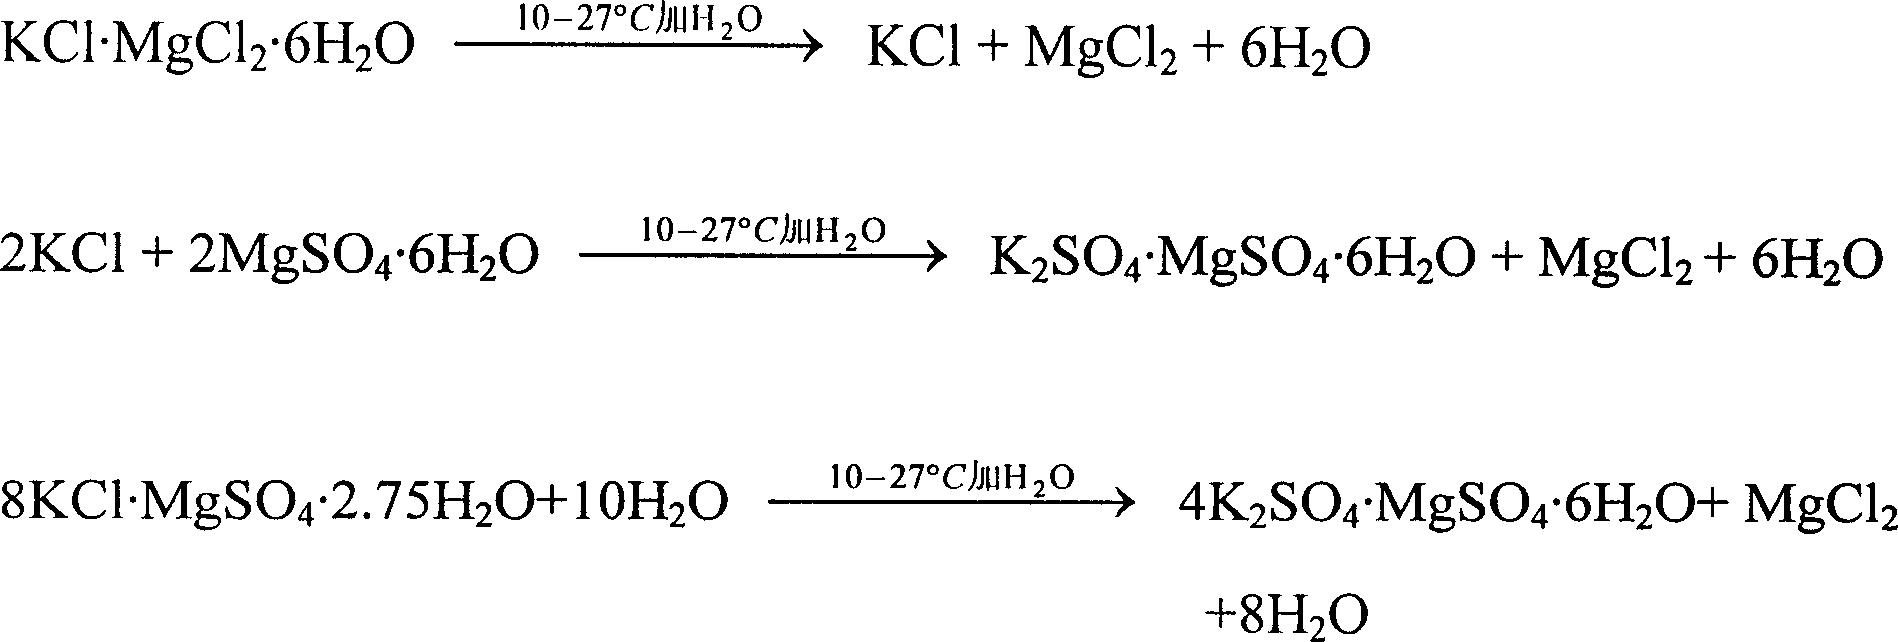 Improved process of preparing magnesium potassium sulfate fertilizer with bittern containing potassium and magnesium sulfite